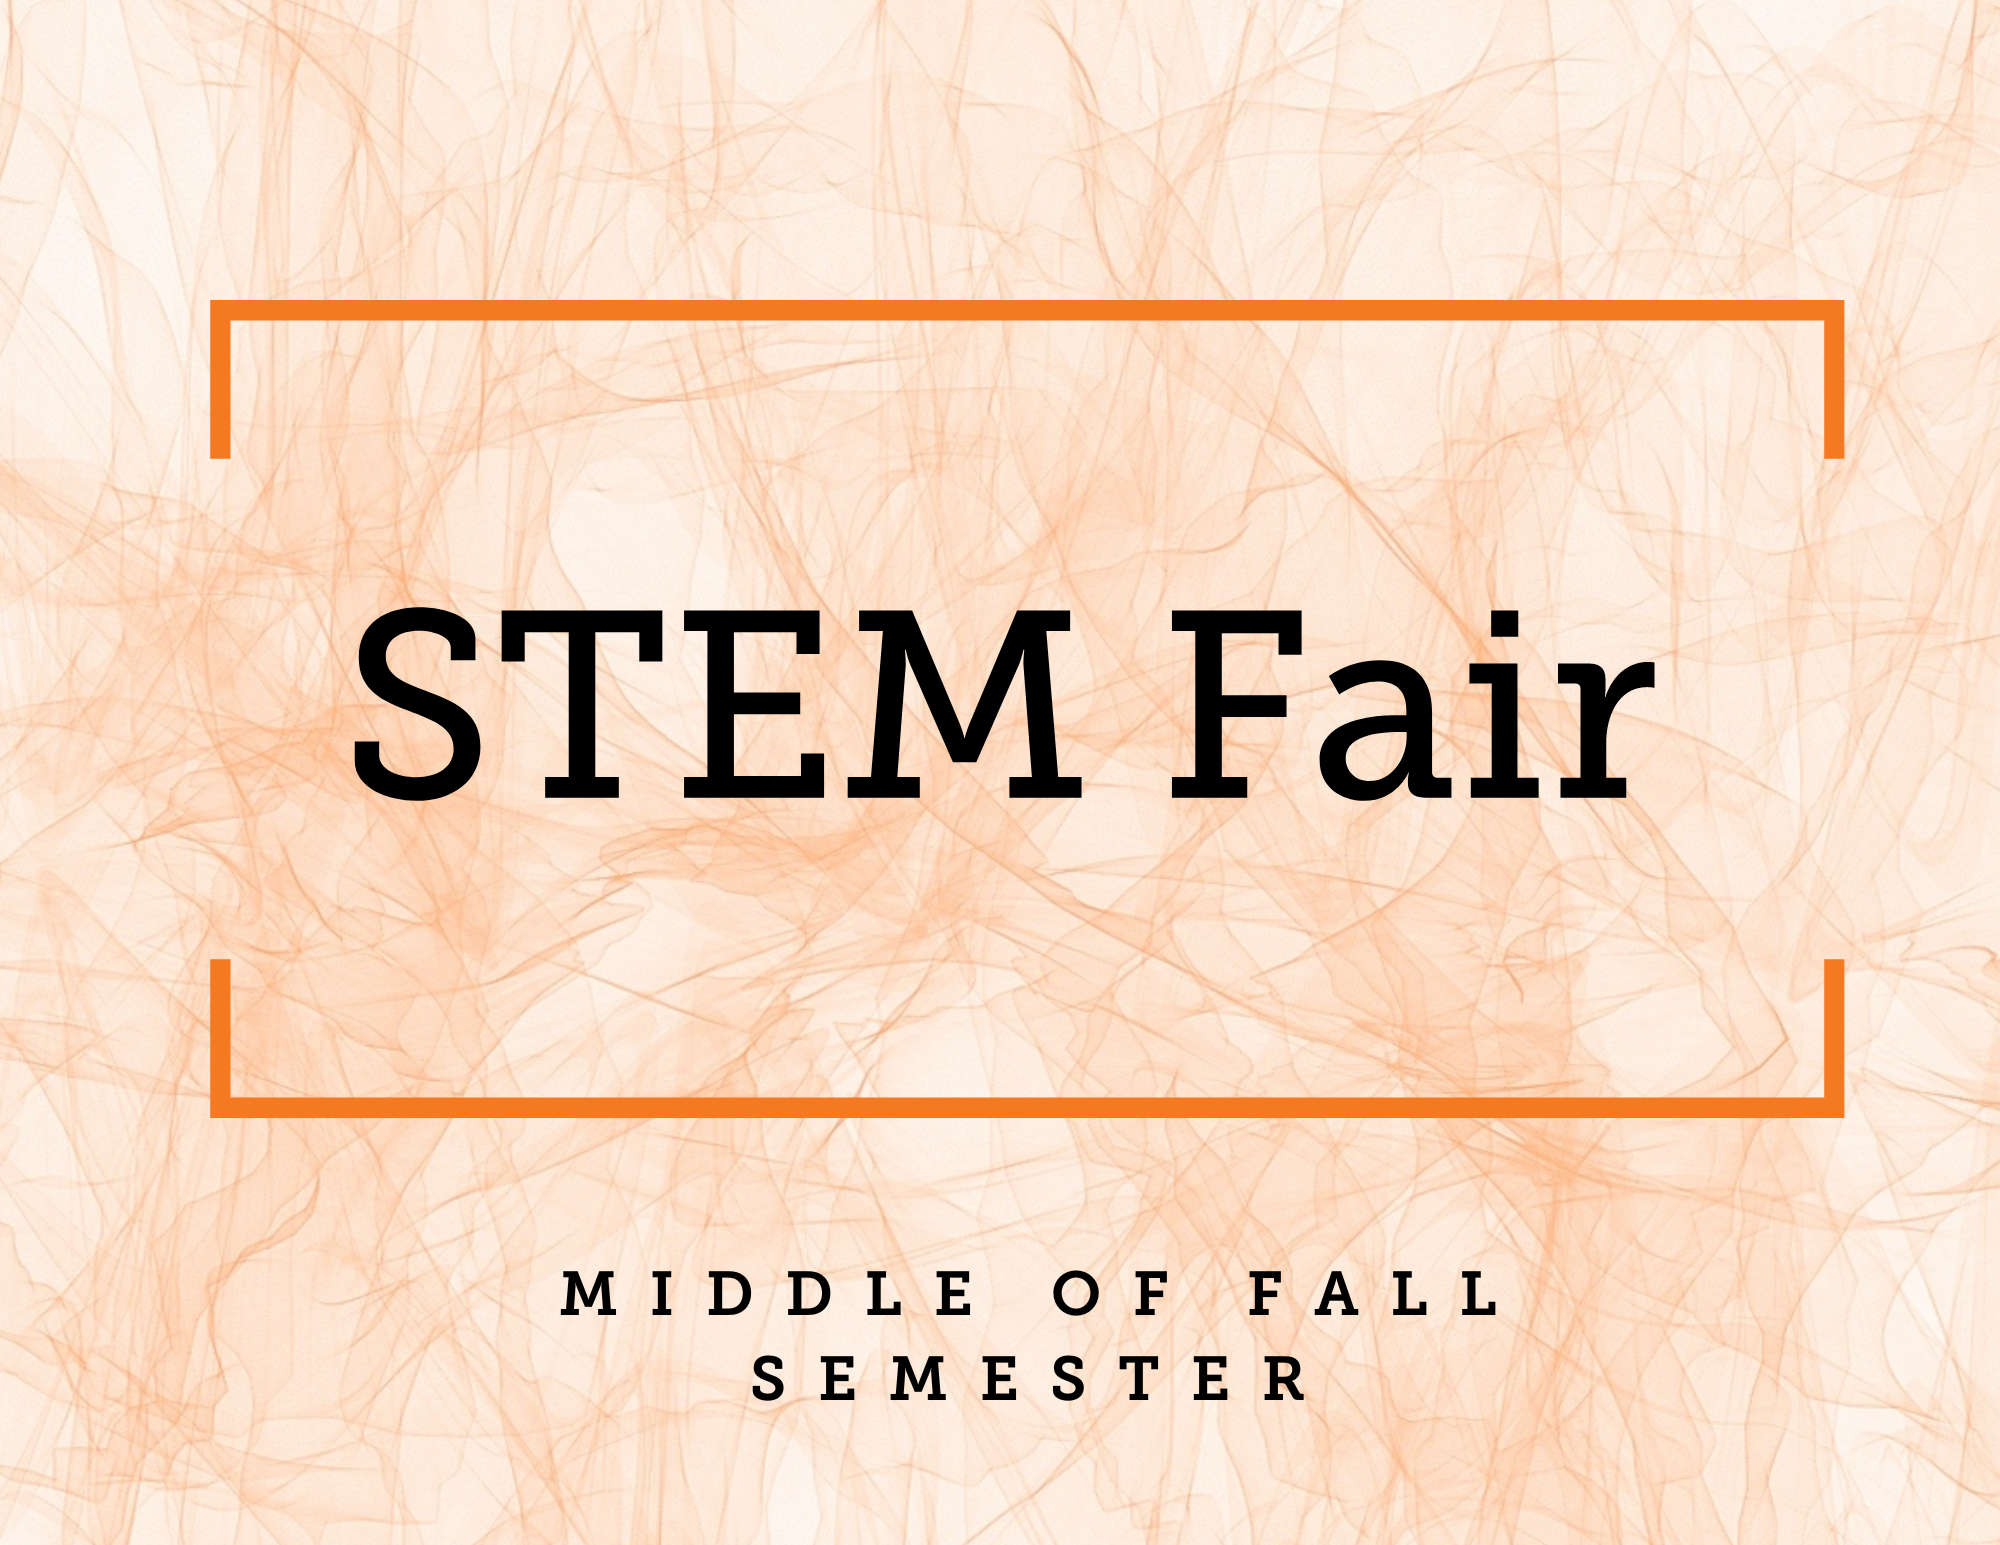 STEM Fair - Middle of Fall semester